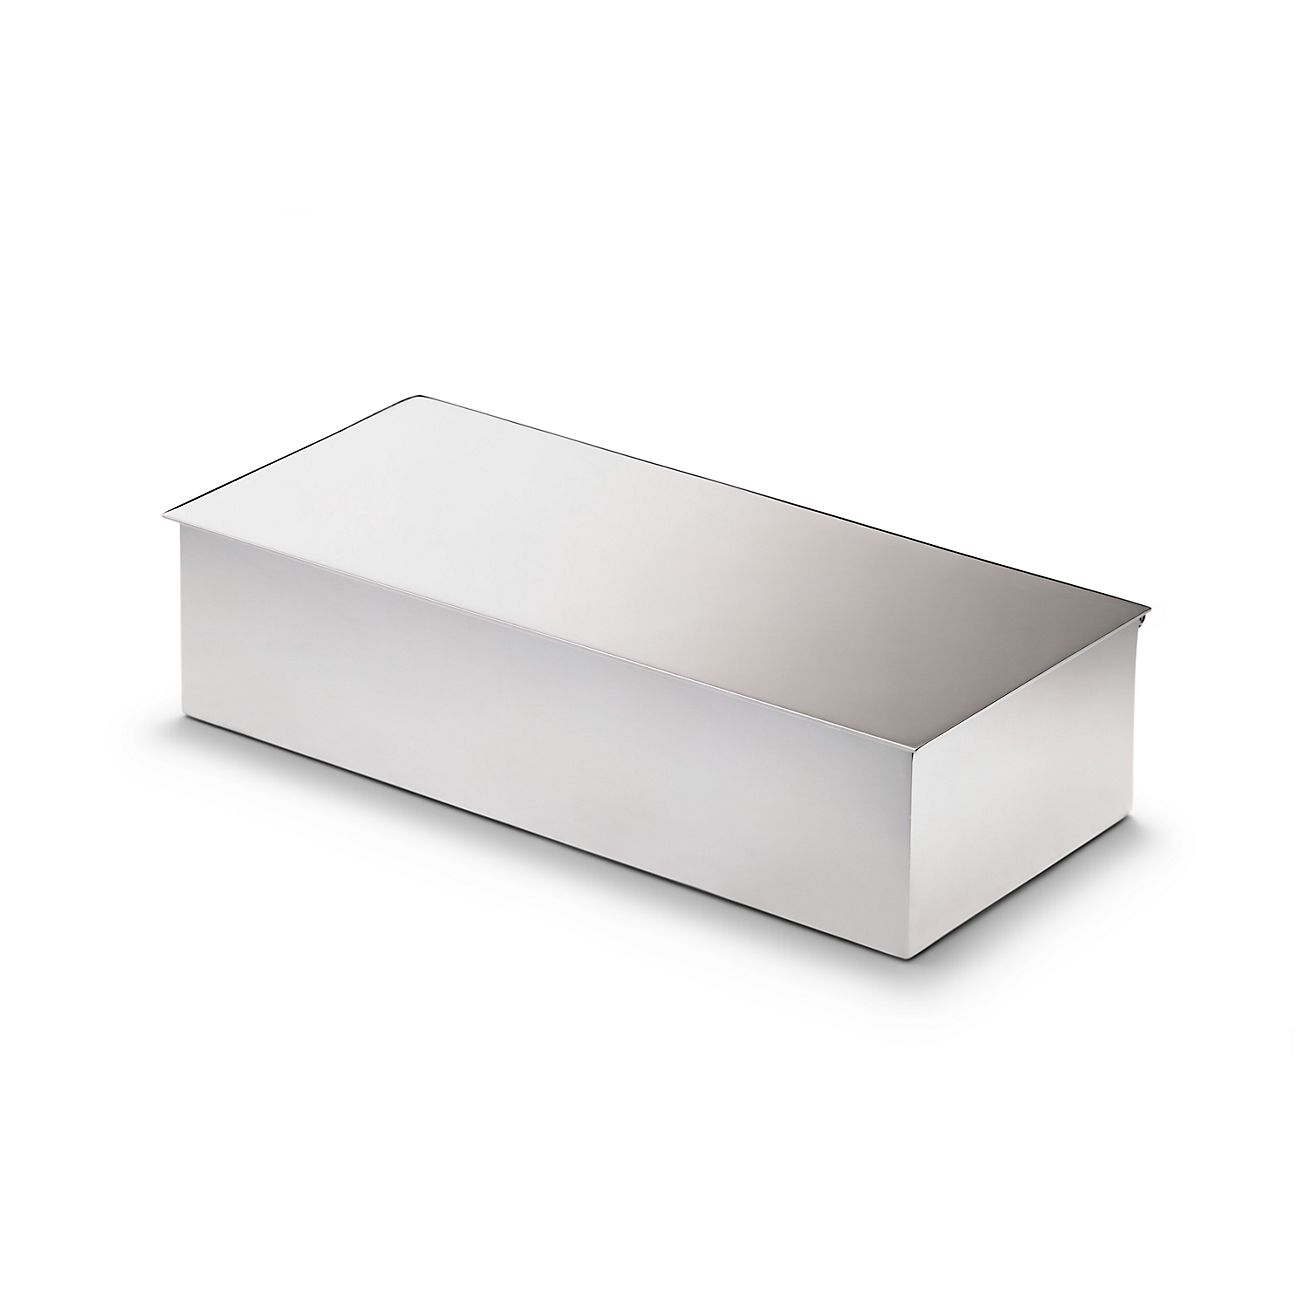 Tiffany Classic box in sterling silver 